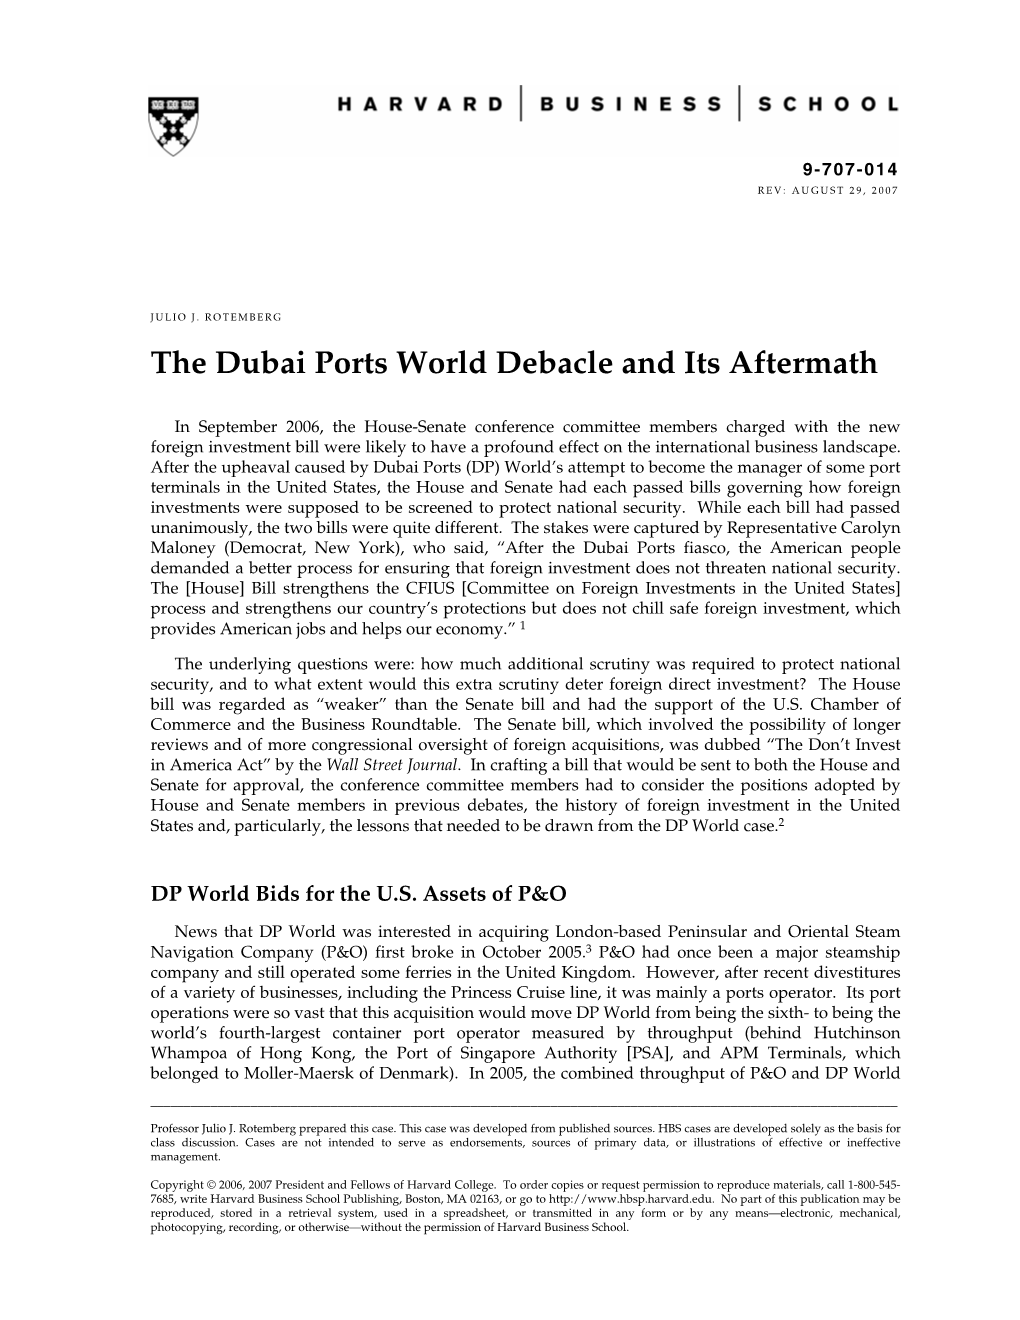 The Dubai Ports World Debacle and Its Aftermath